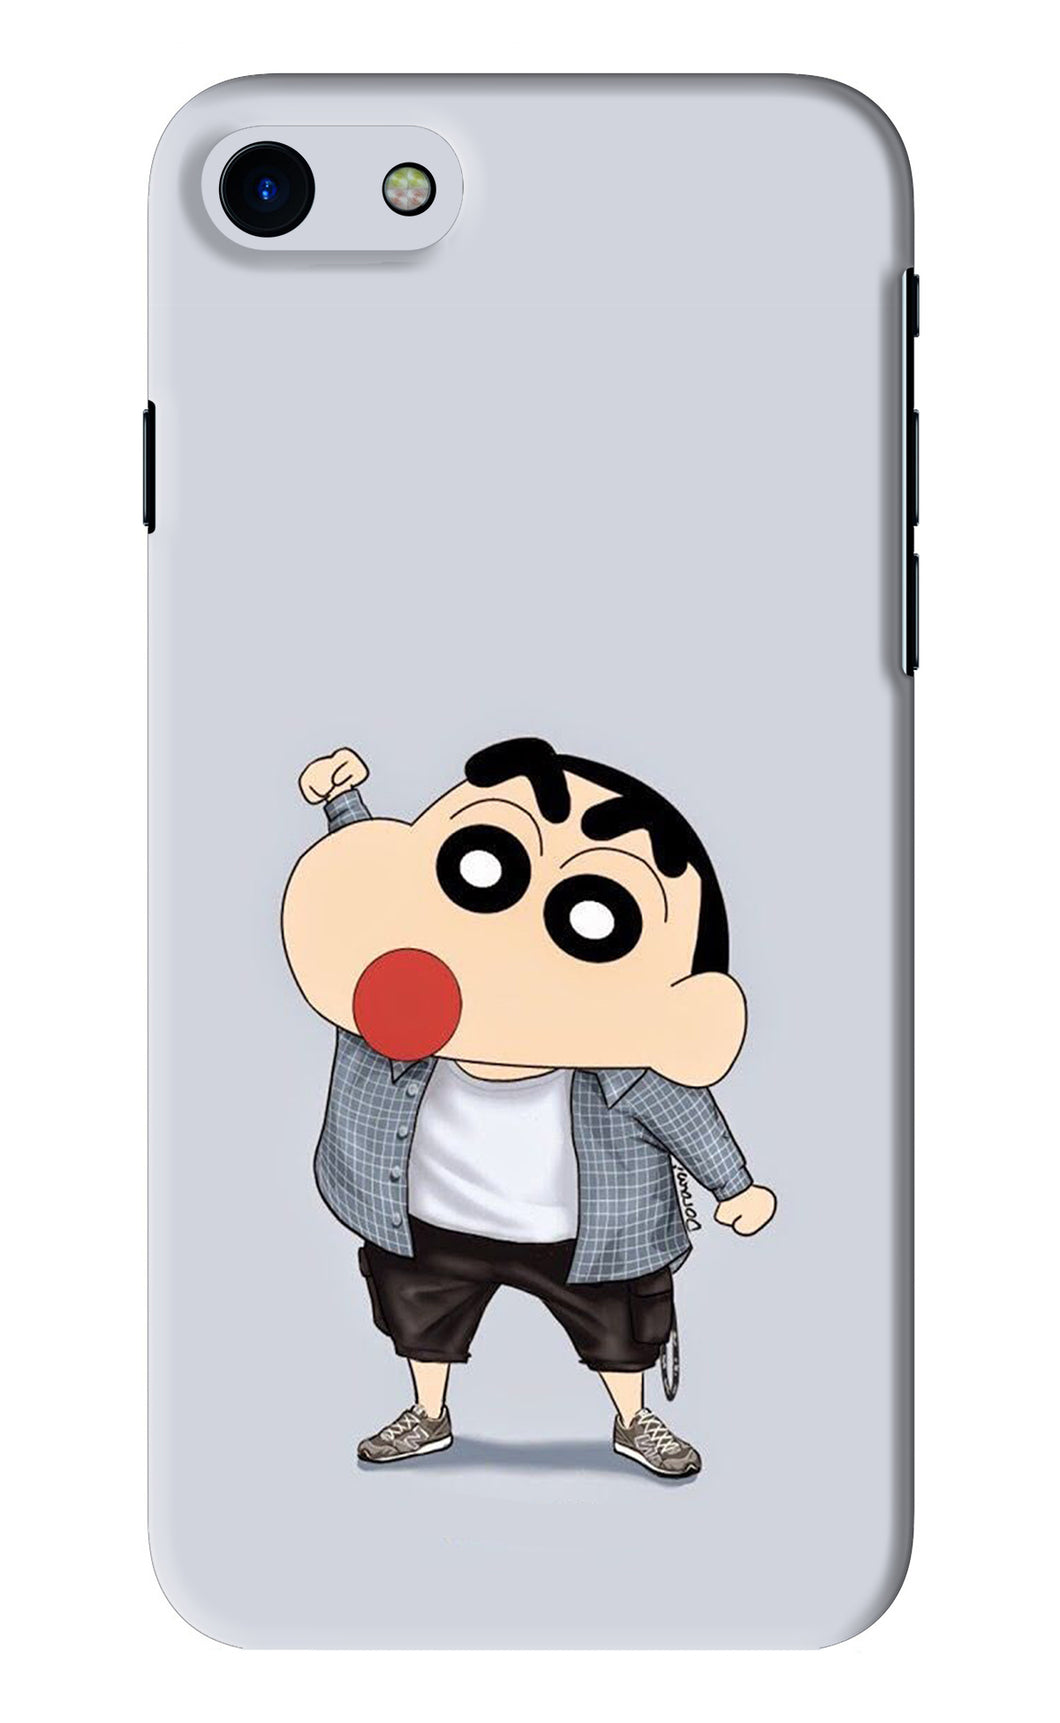 Shinchan iPhone 8 Back Skin Wrap